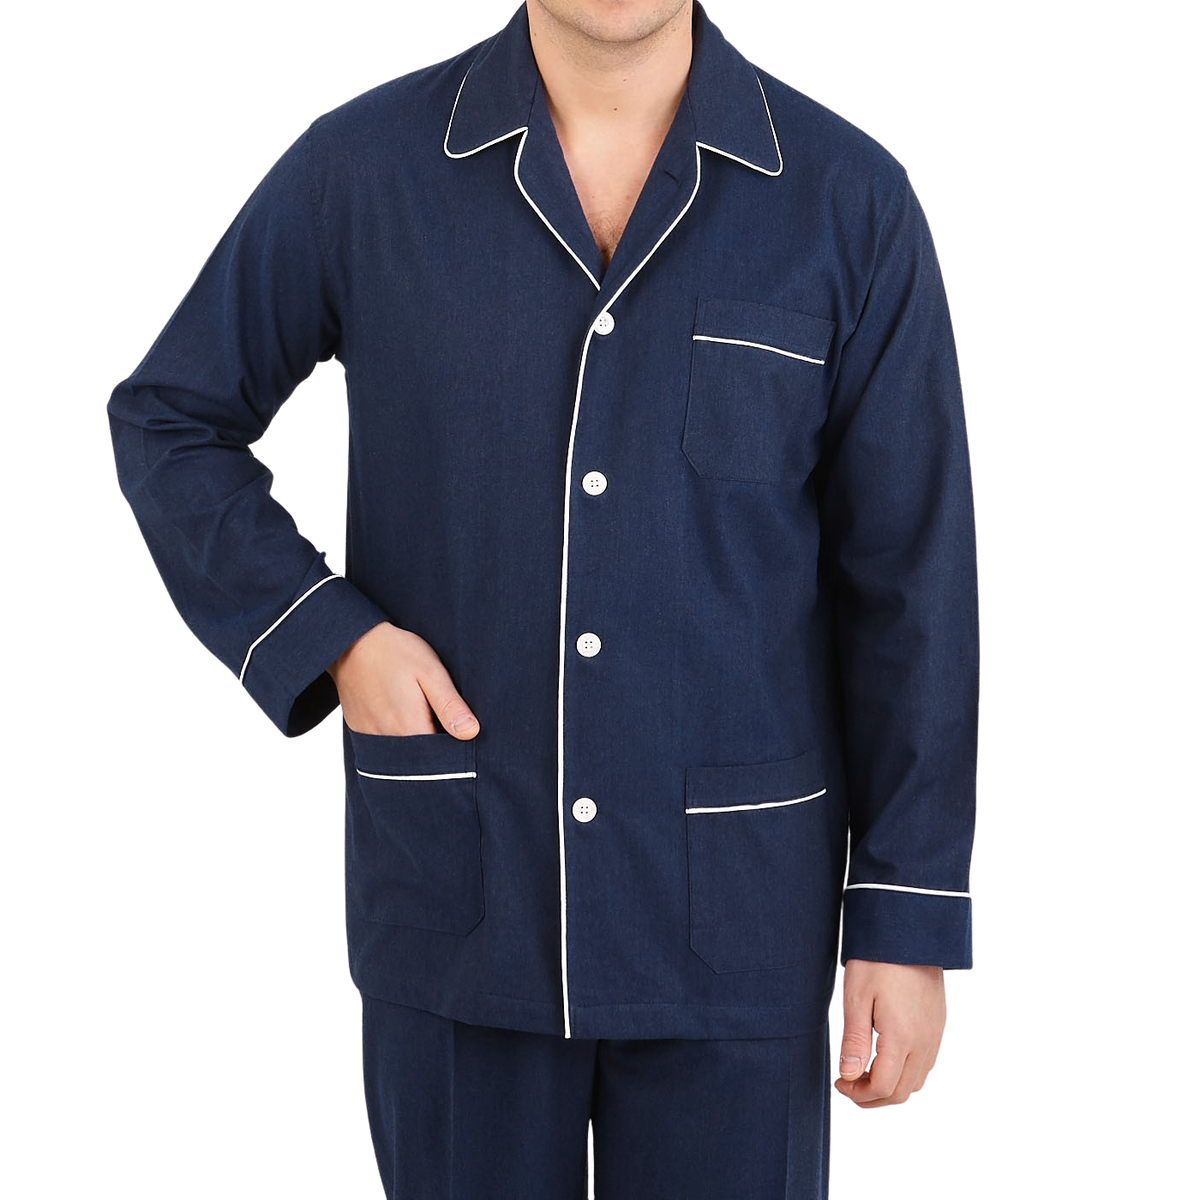 Derek Rose Blue Piped Cotton Classic Fit Pyjamas Front 1